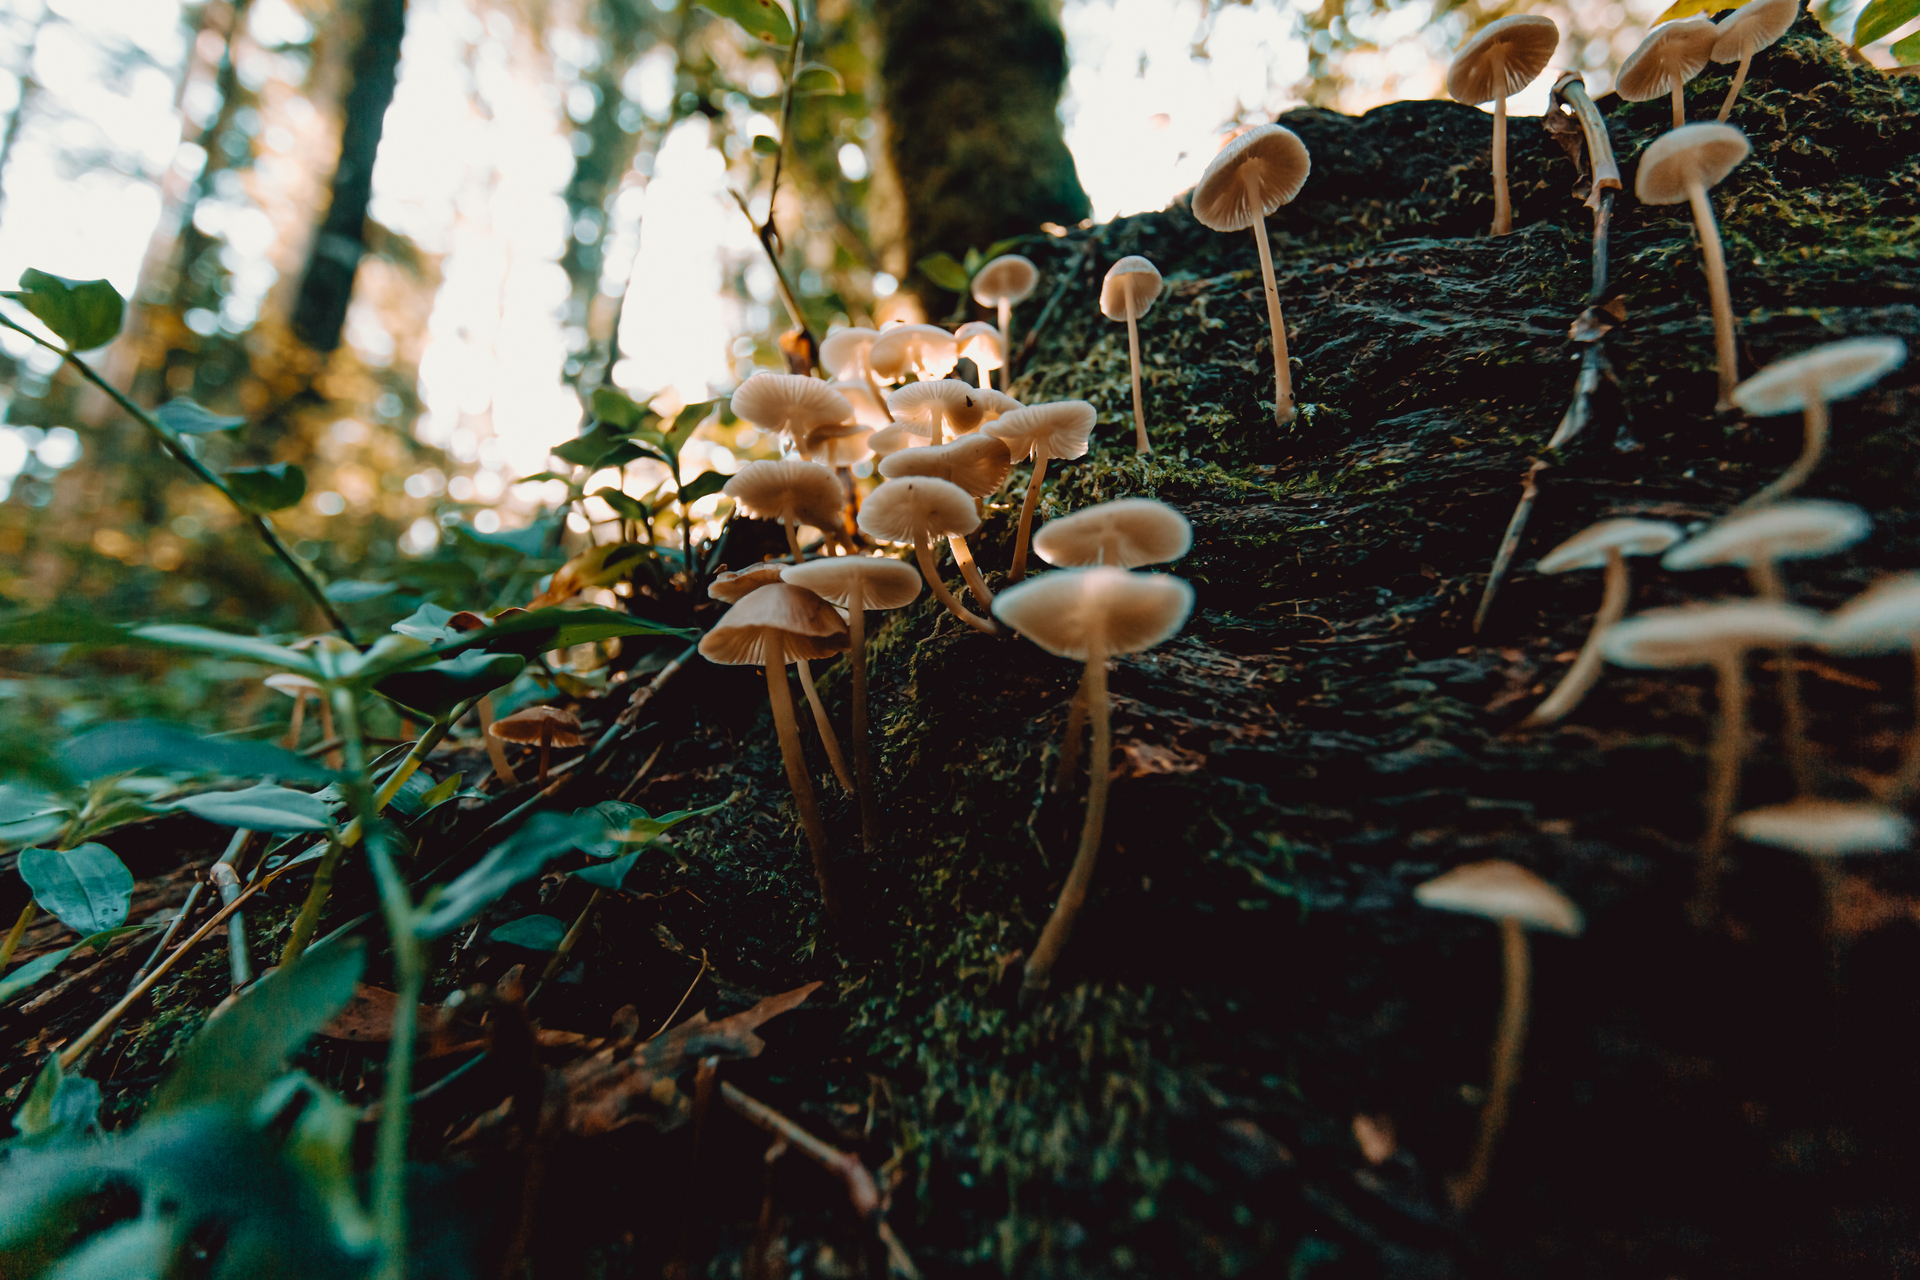 Buy magic mushrooms online, dried mushrooms, psilocybin mushrooms, British Columbia, Vancouver Island